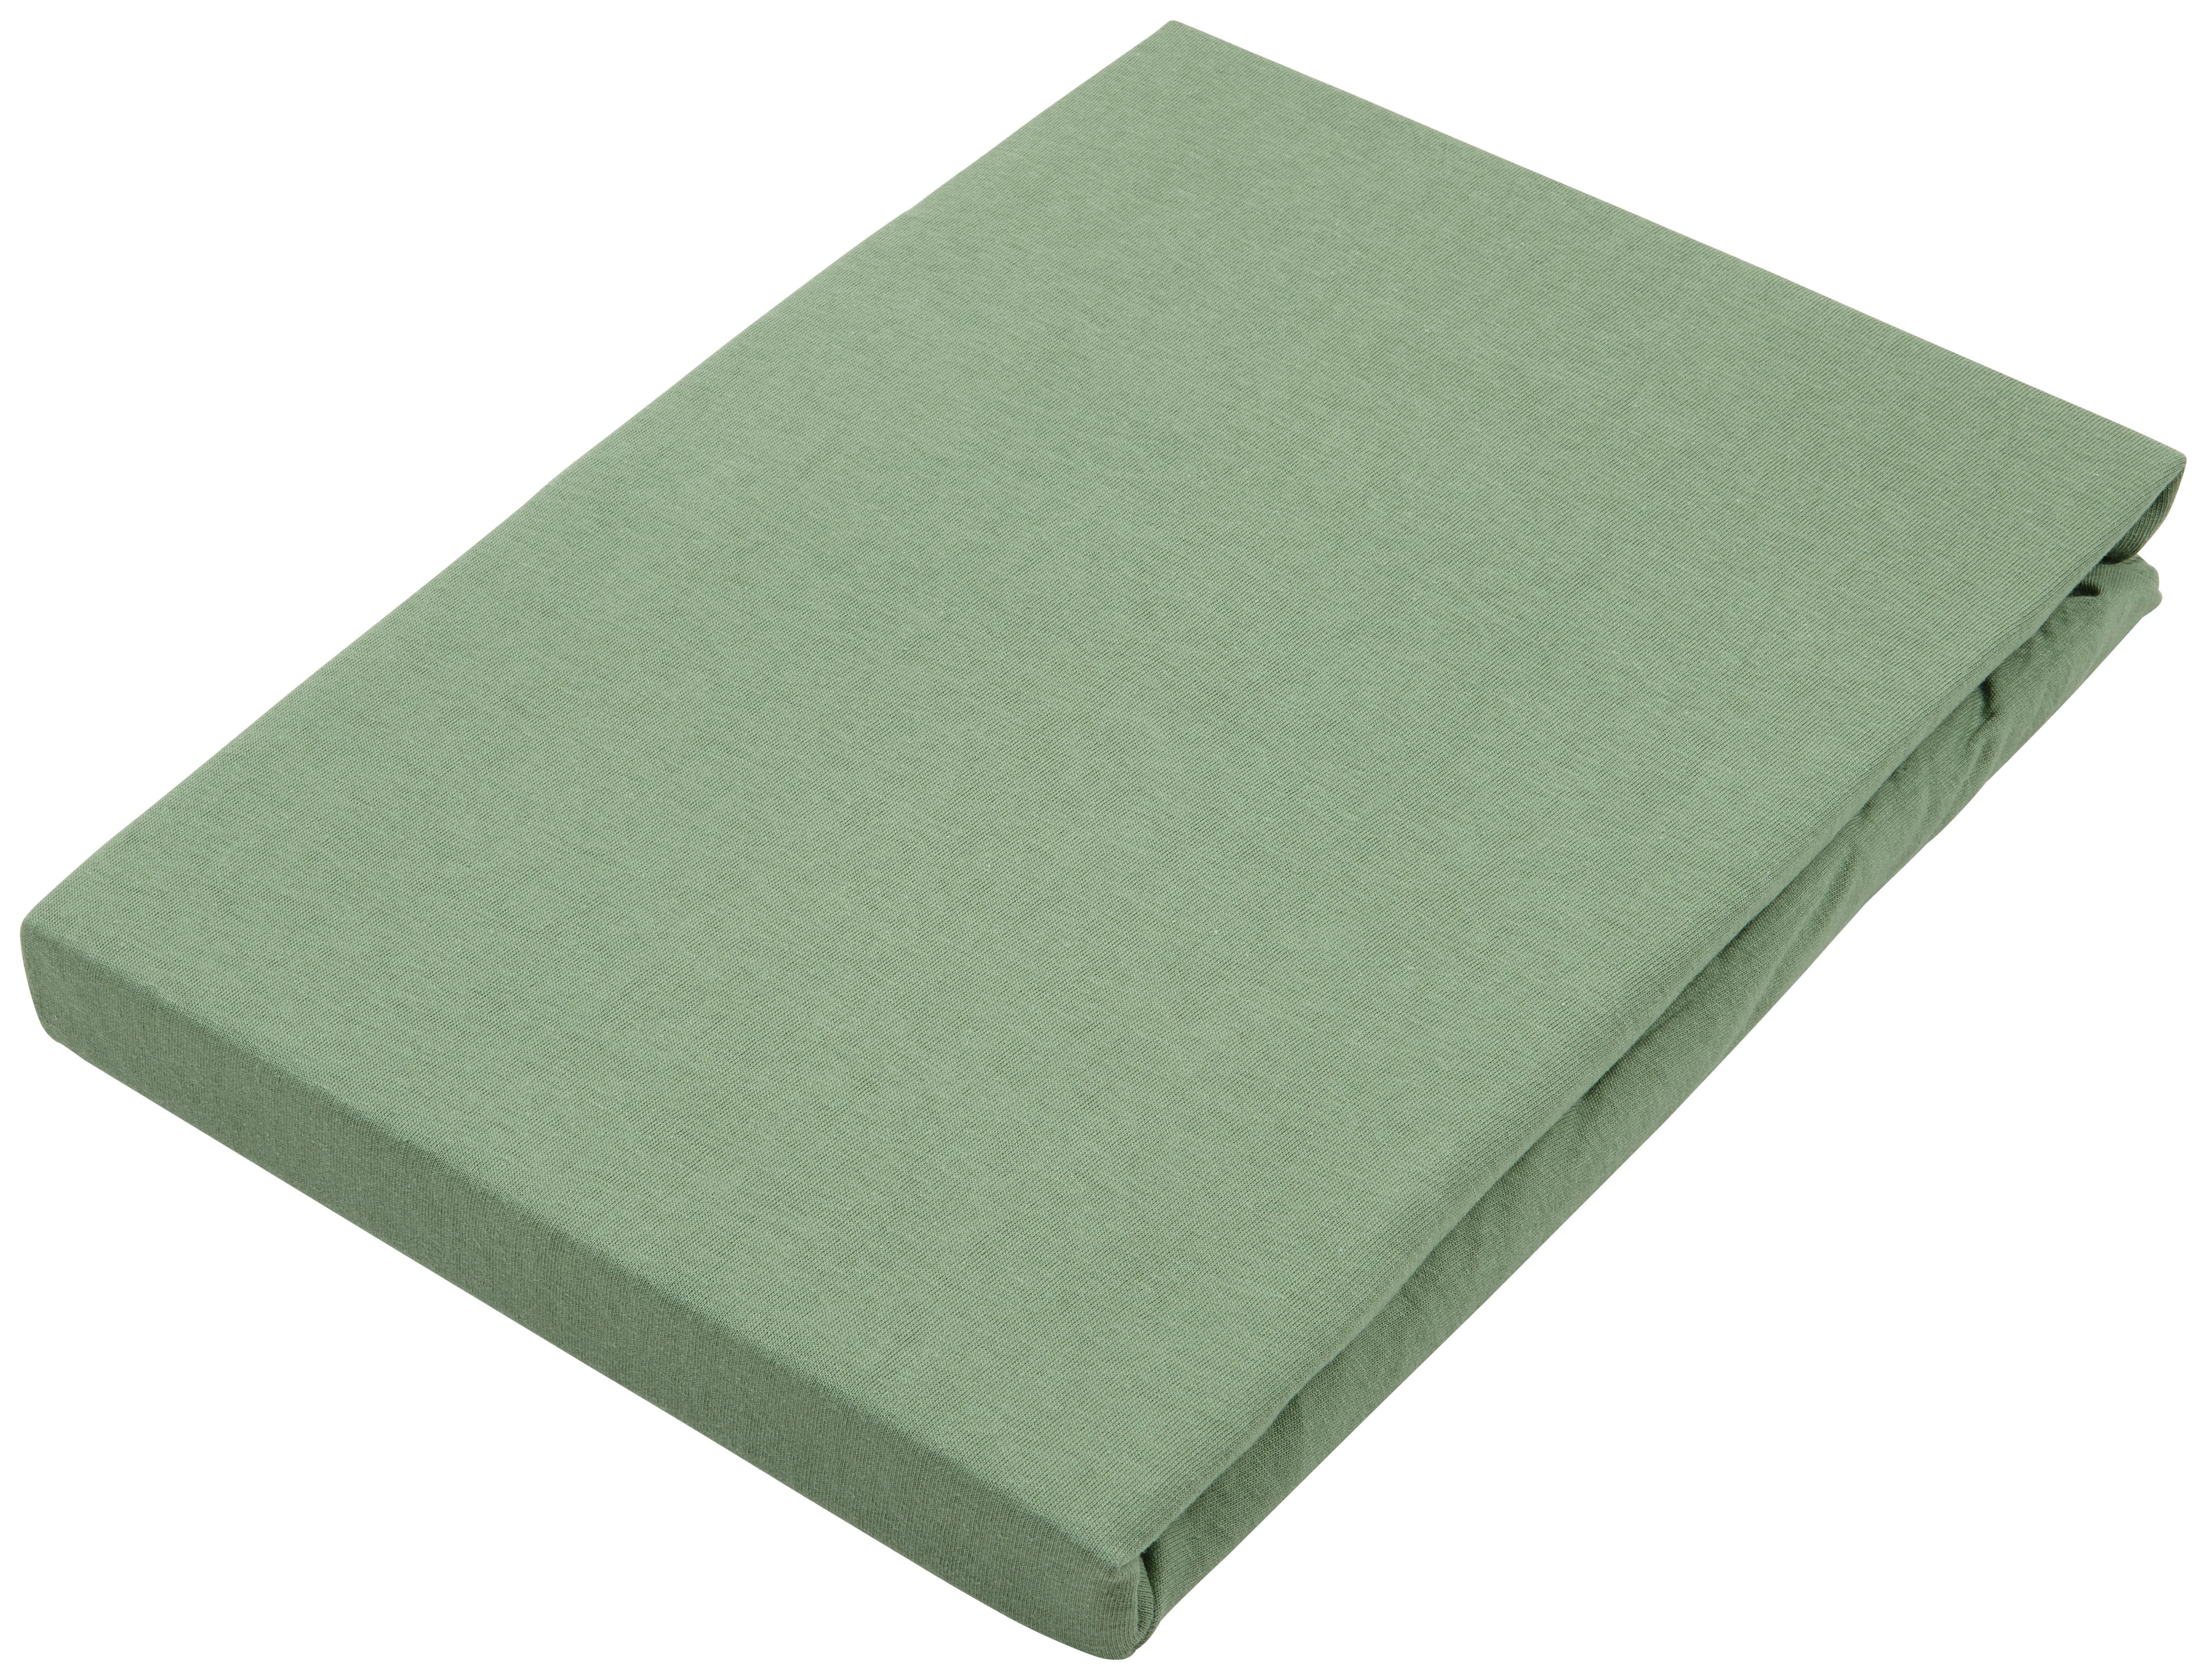 NAPENJALNA RJUHA 100/200 cm  - temno zelena, Basics, tekstil (100/200cm) - Novel